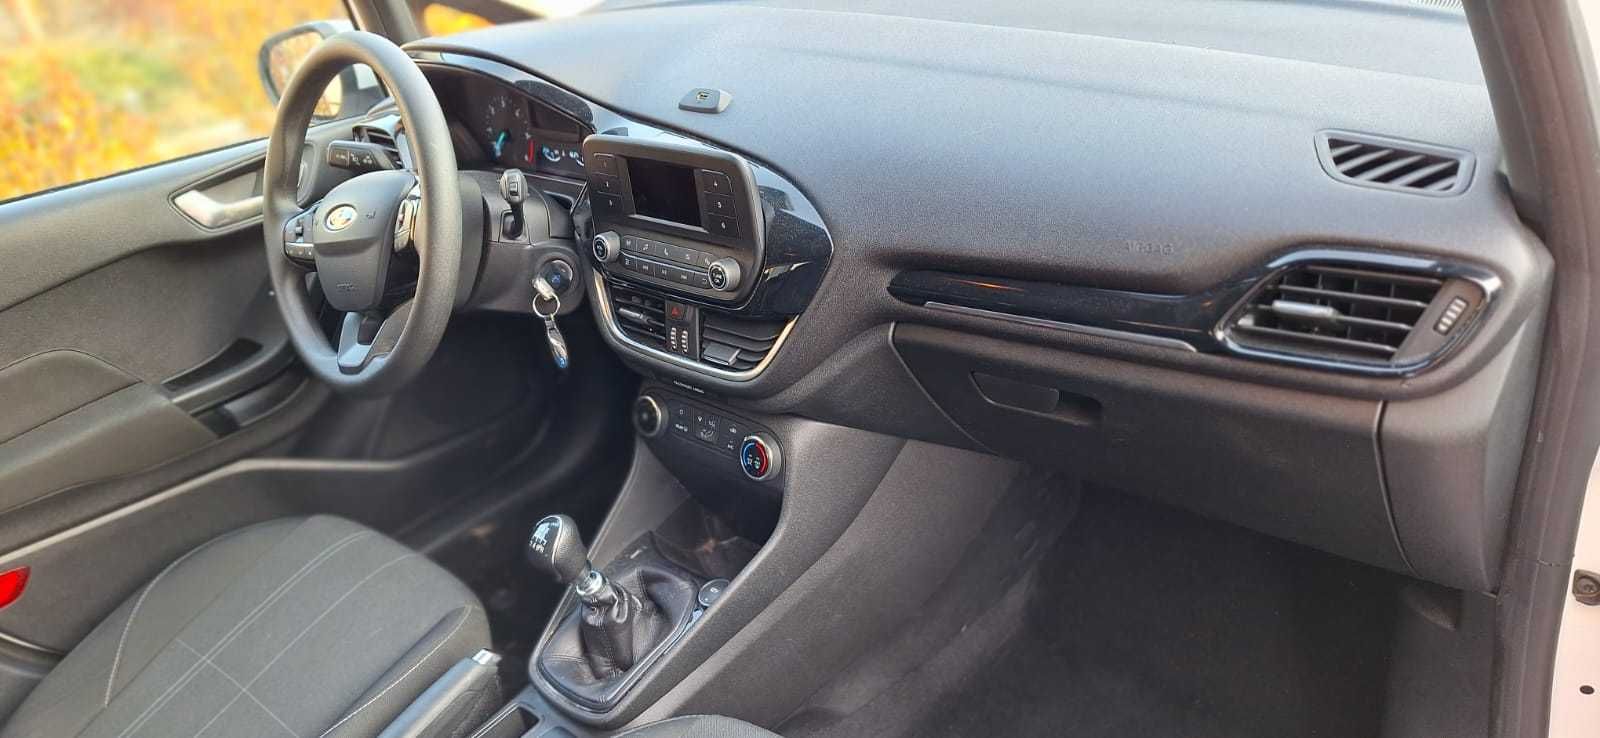 Ford Fiesta 2019 1.5 TDCi